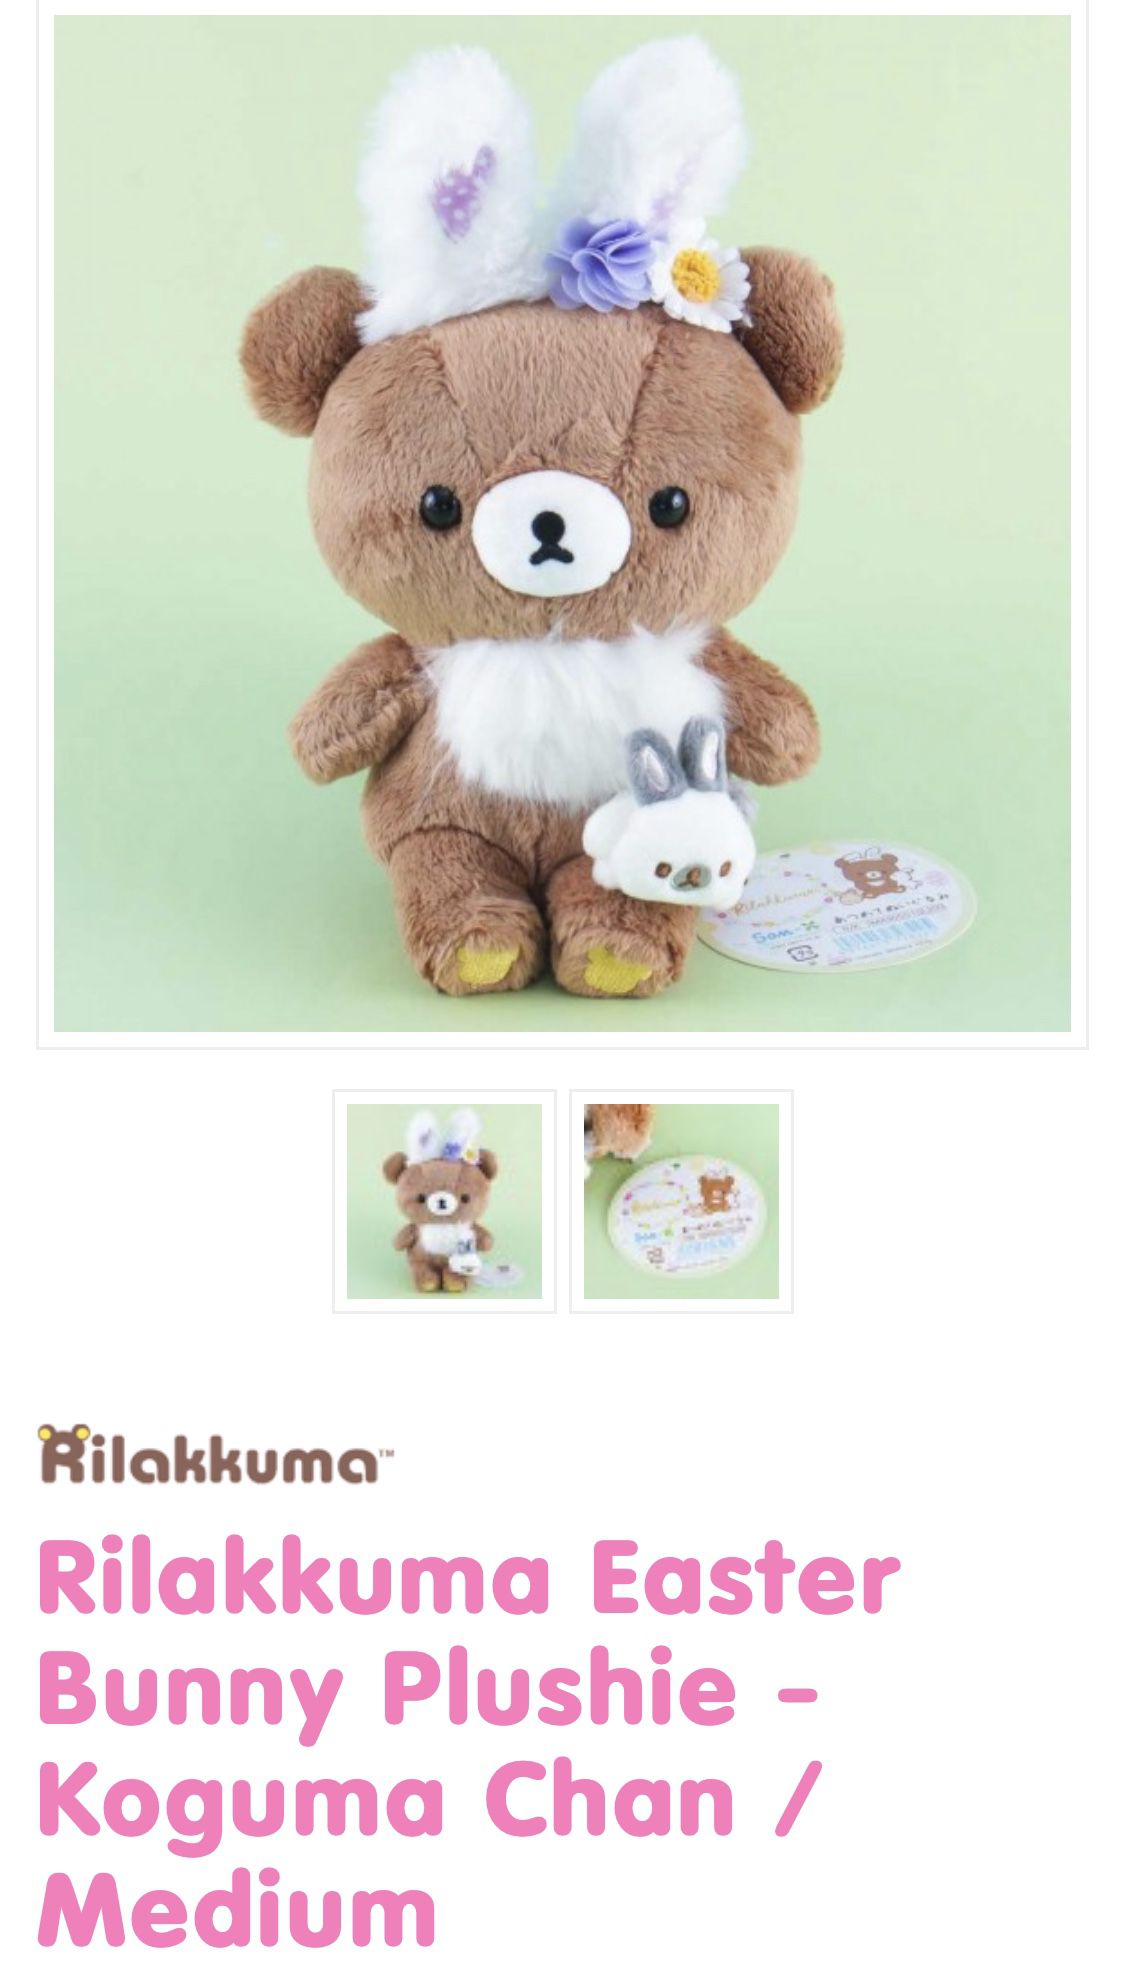 Official Rilakkuma Easter Bunny Plushie - Koguma Chan Teddy Bear